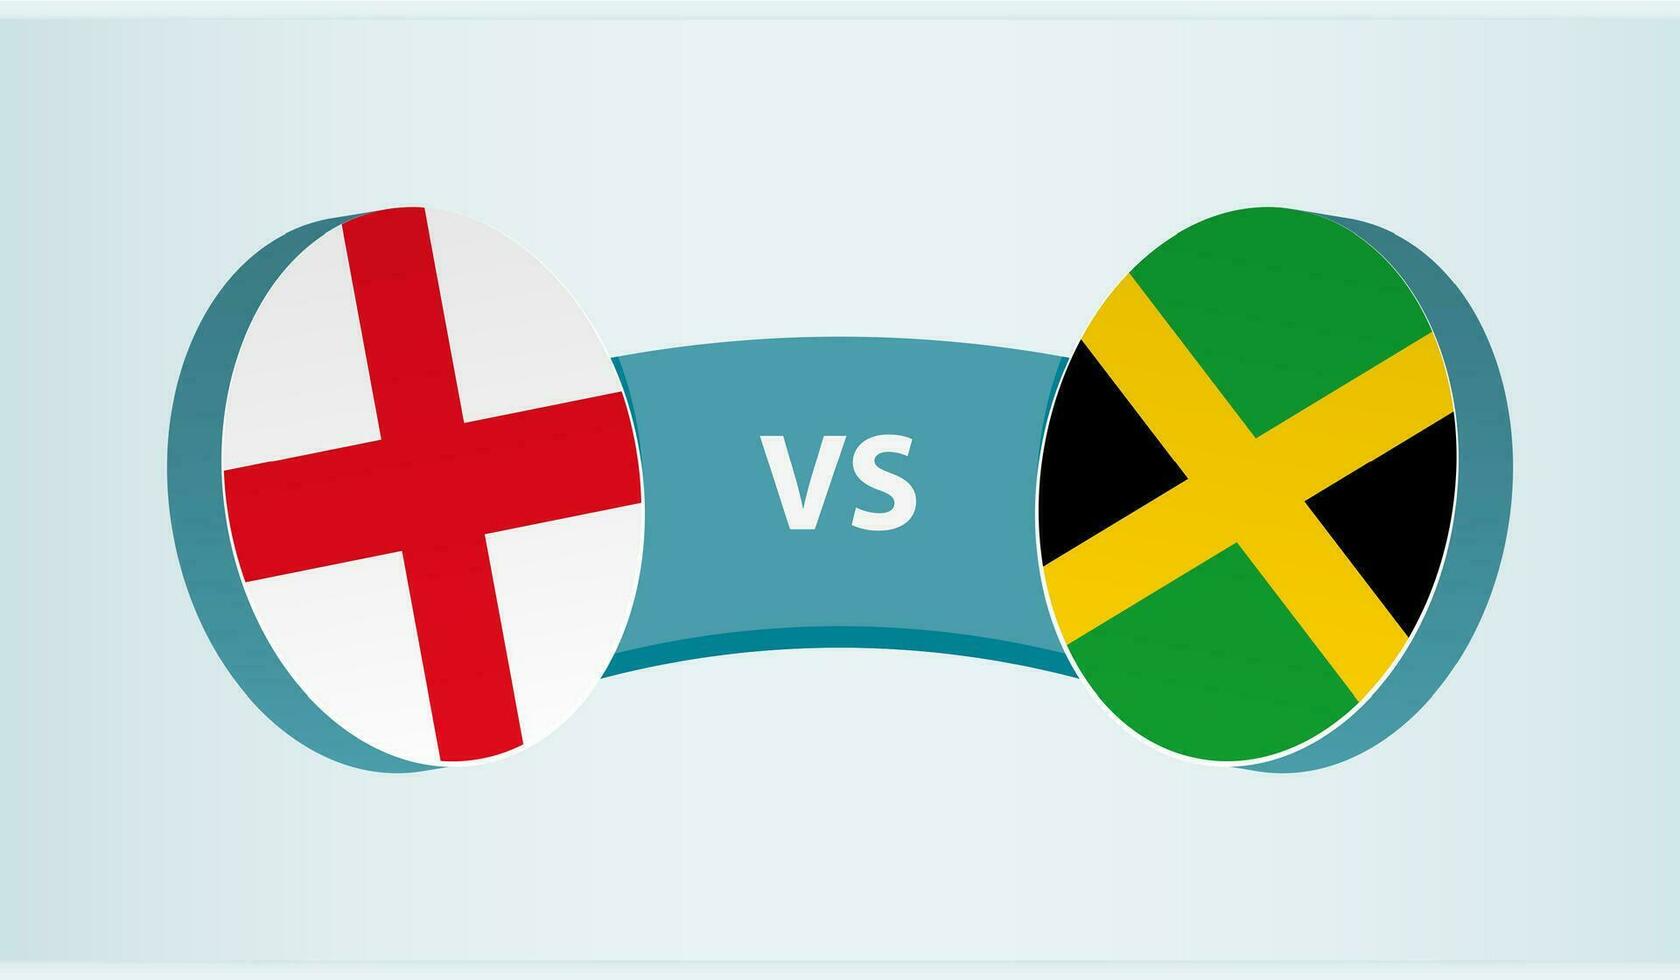 Inglaterra versus Jamaica, equipe Esportes concorrência conceito. vetor